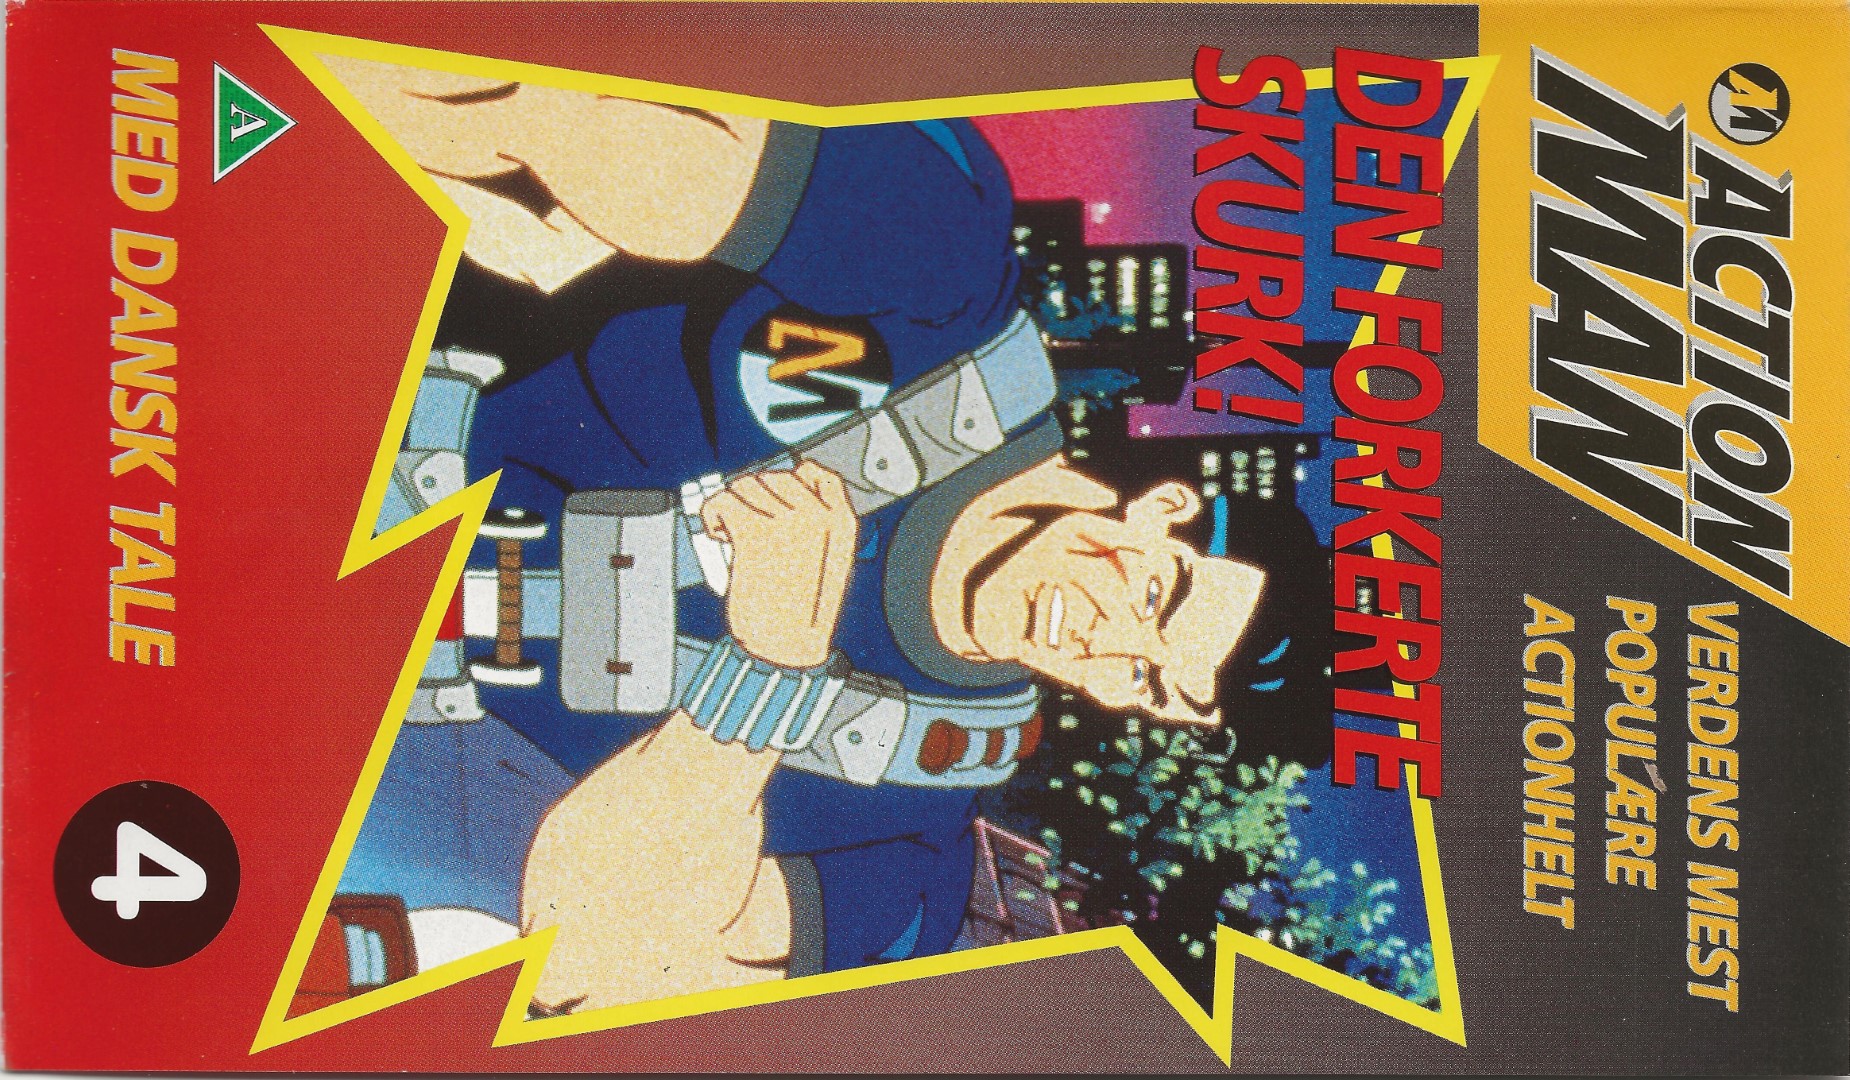 Action Man (4) - Den forkerte skurk  VHS TMG A/S 1995